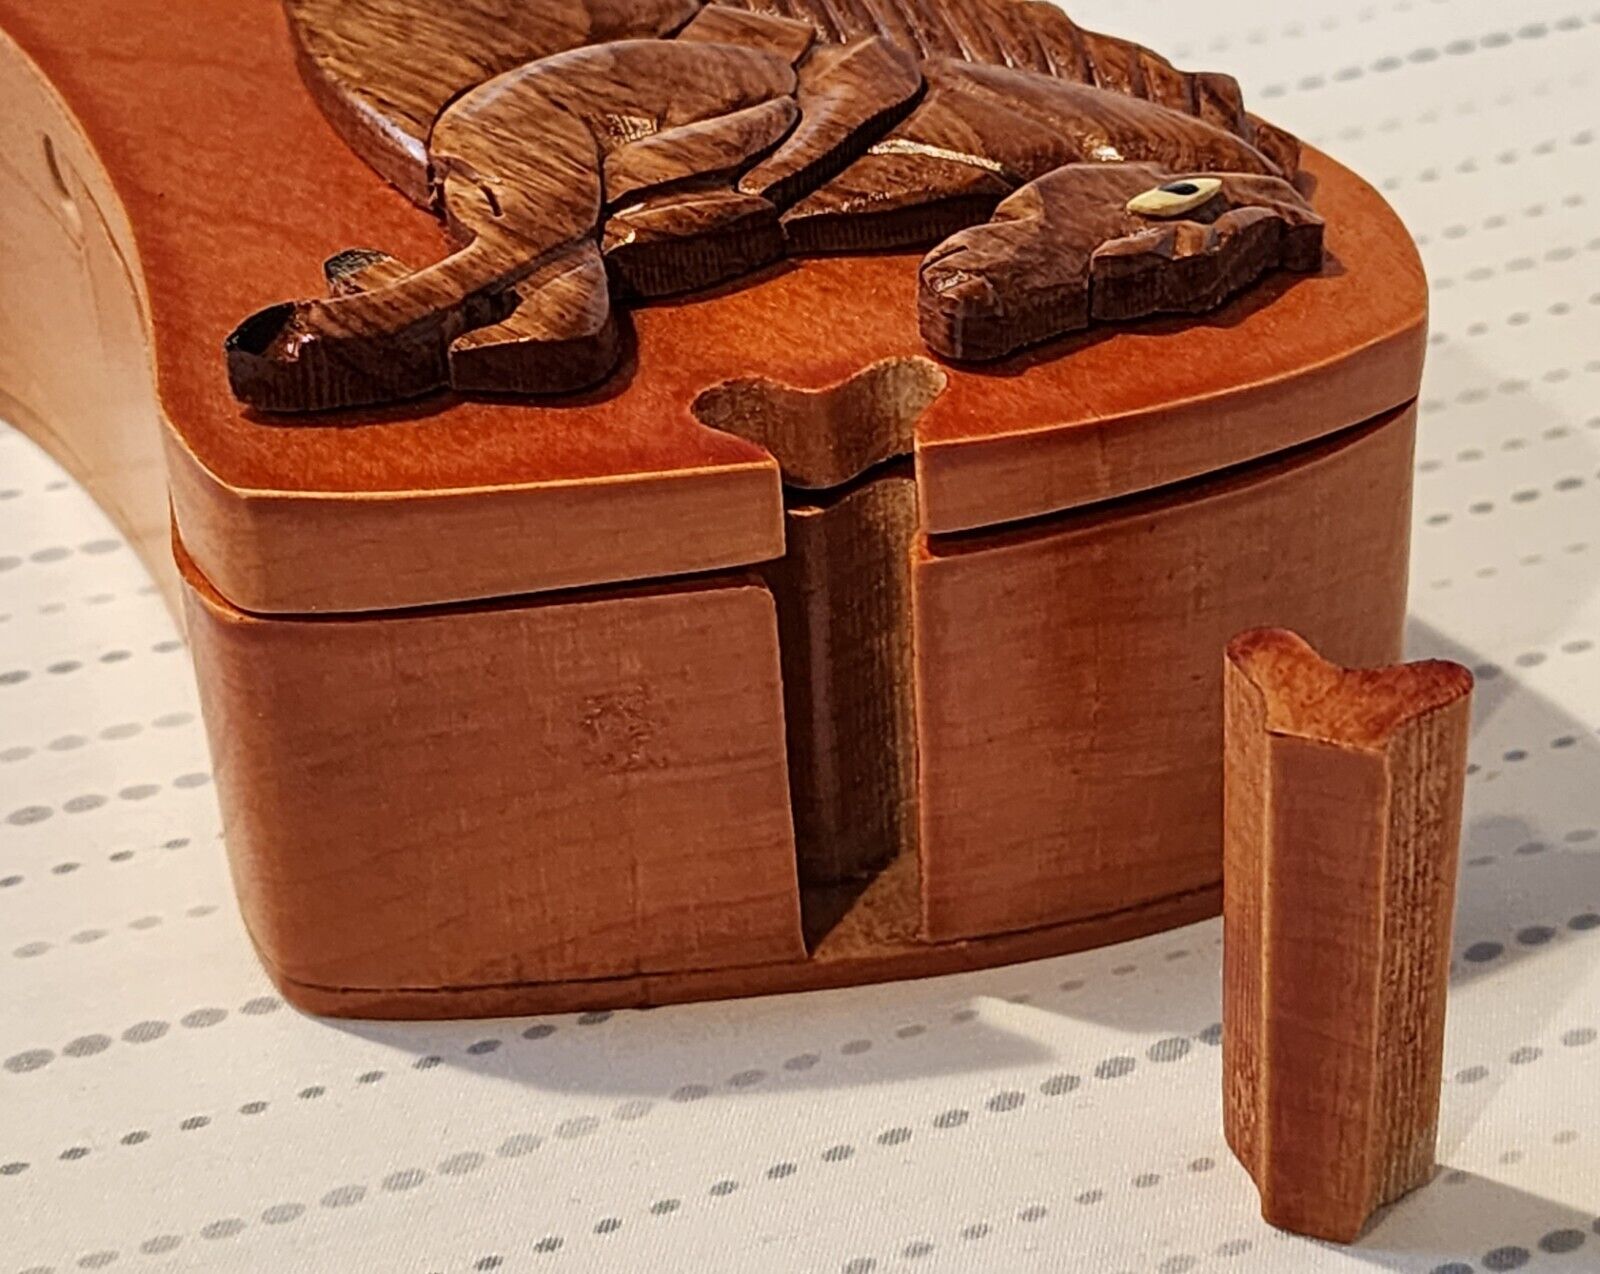 Handcrafted Intarsia Wood Art Horse Puzzle Box Jewelry Trinket Box Collectible Без бренда - фотография #7